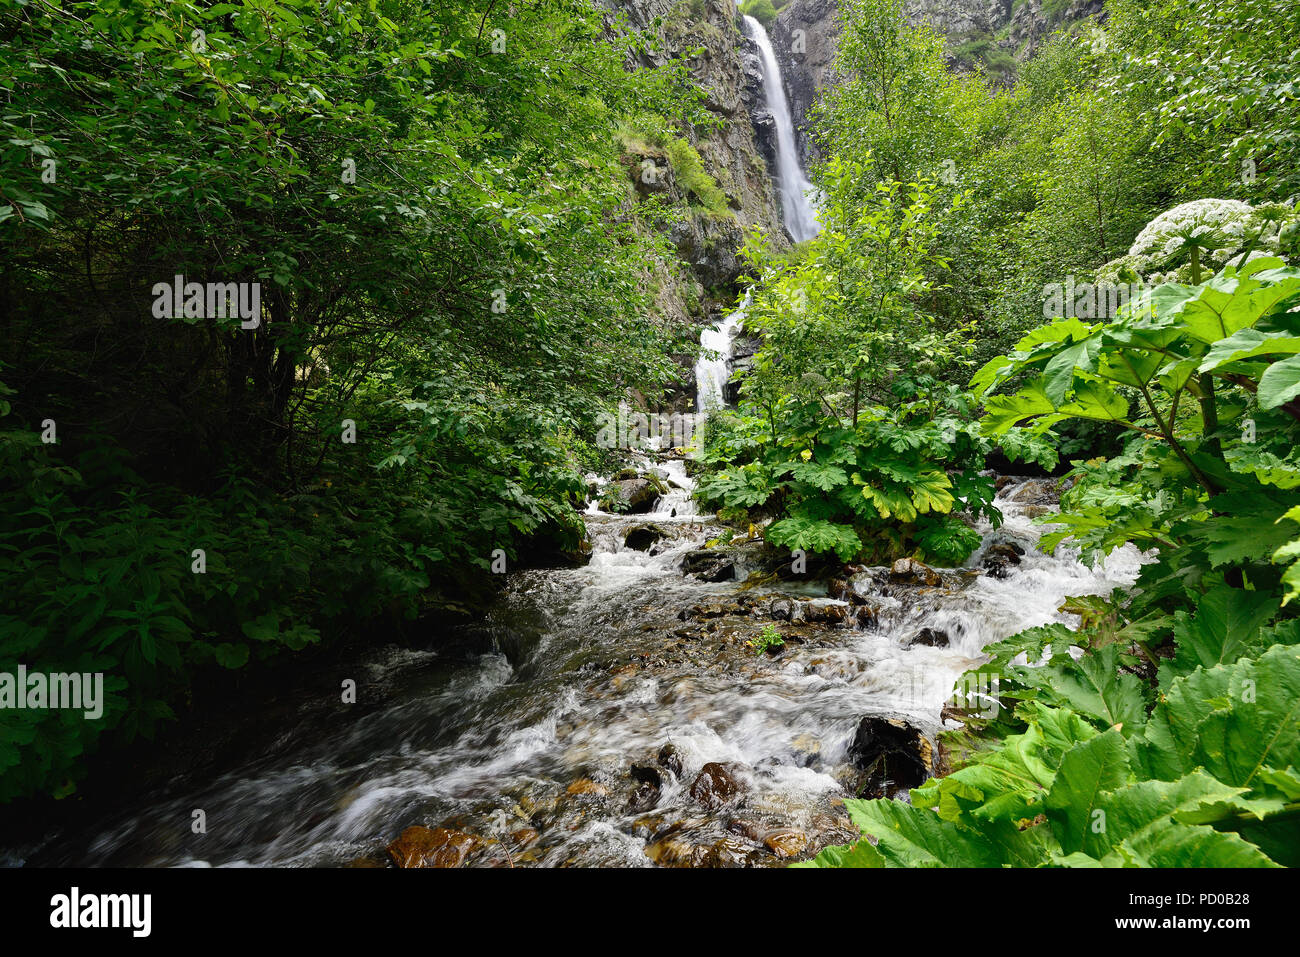 Gveleti Big Waterfalls being in a Dariali Gorge near the Kazbegi city in the mountains of the Caucasus, Geprgia Stock Photo